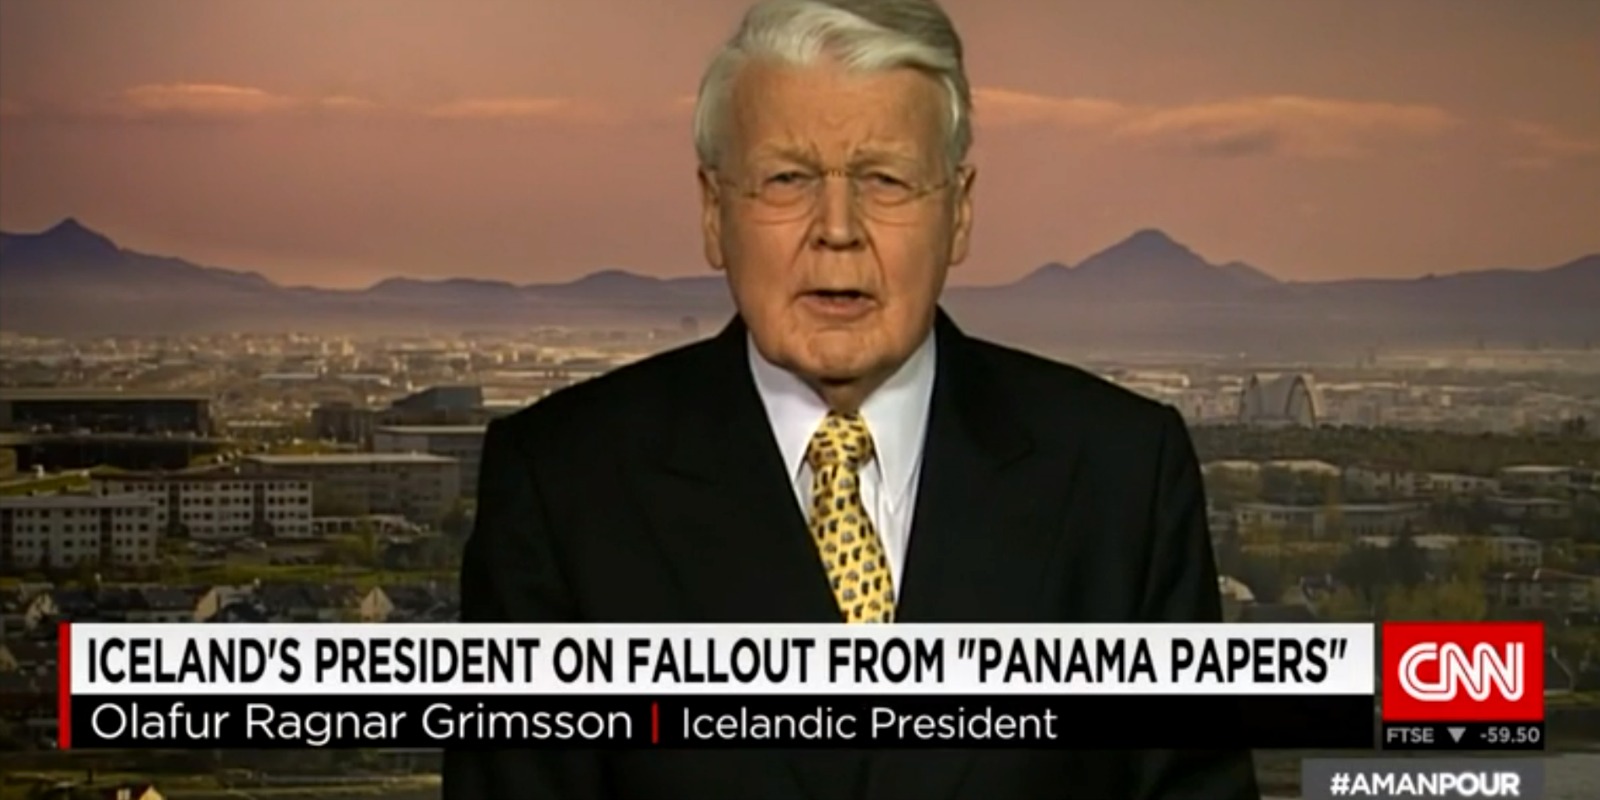 Iceland's President Ólafur Grímsson on CNN